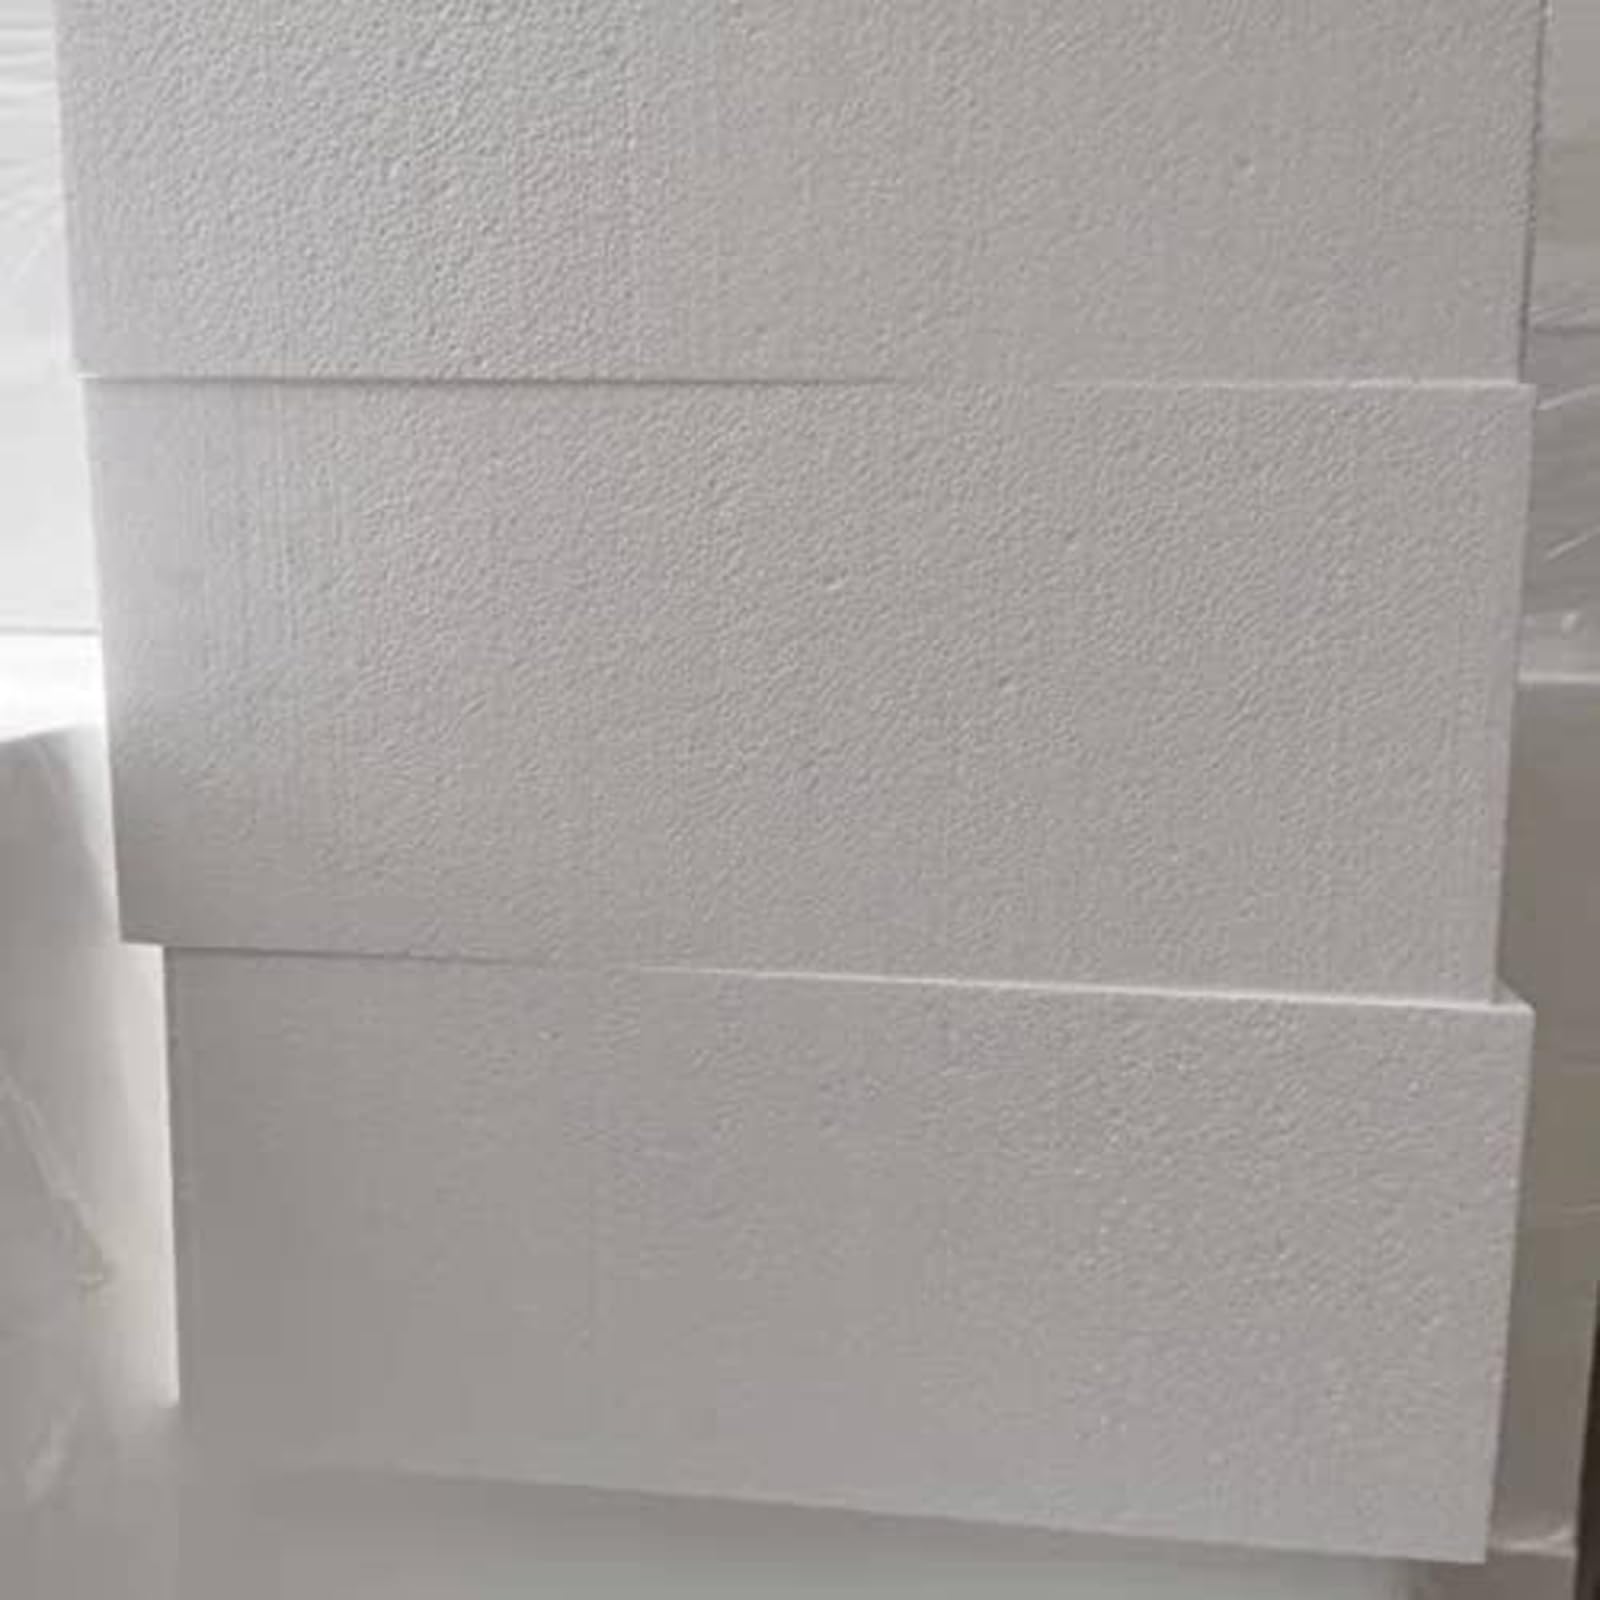  AMZQNART Craft Foam Blocks, 7 in Thick 17x11 EPS